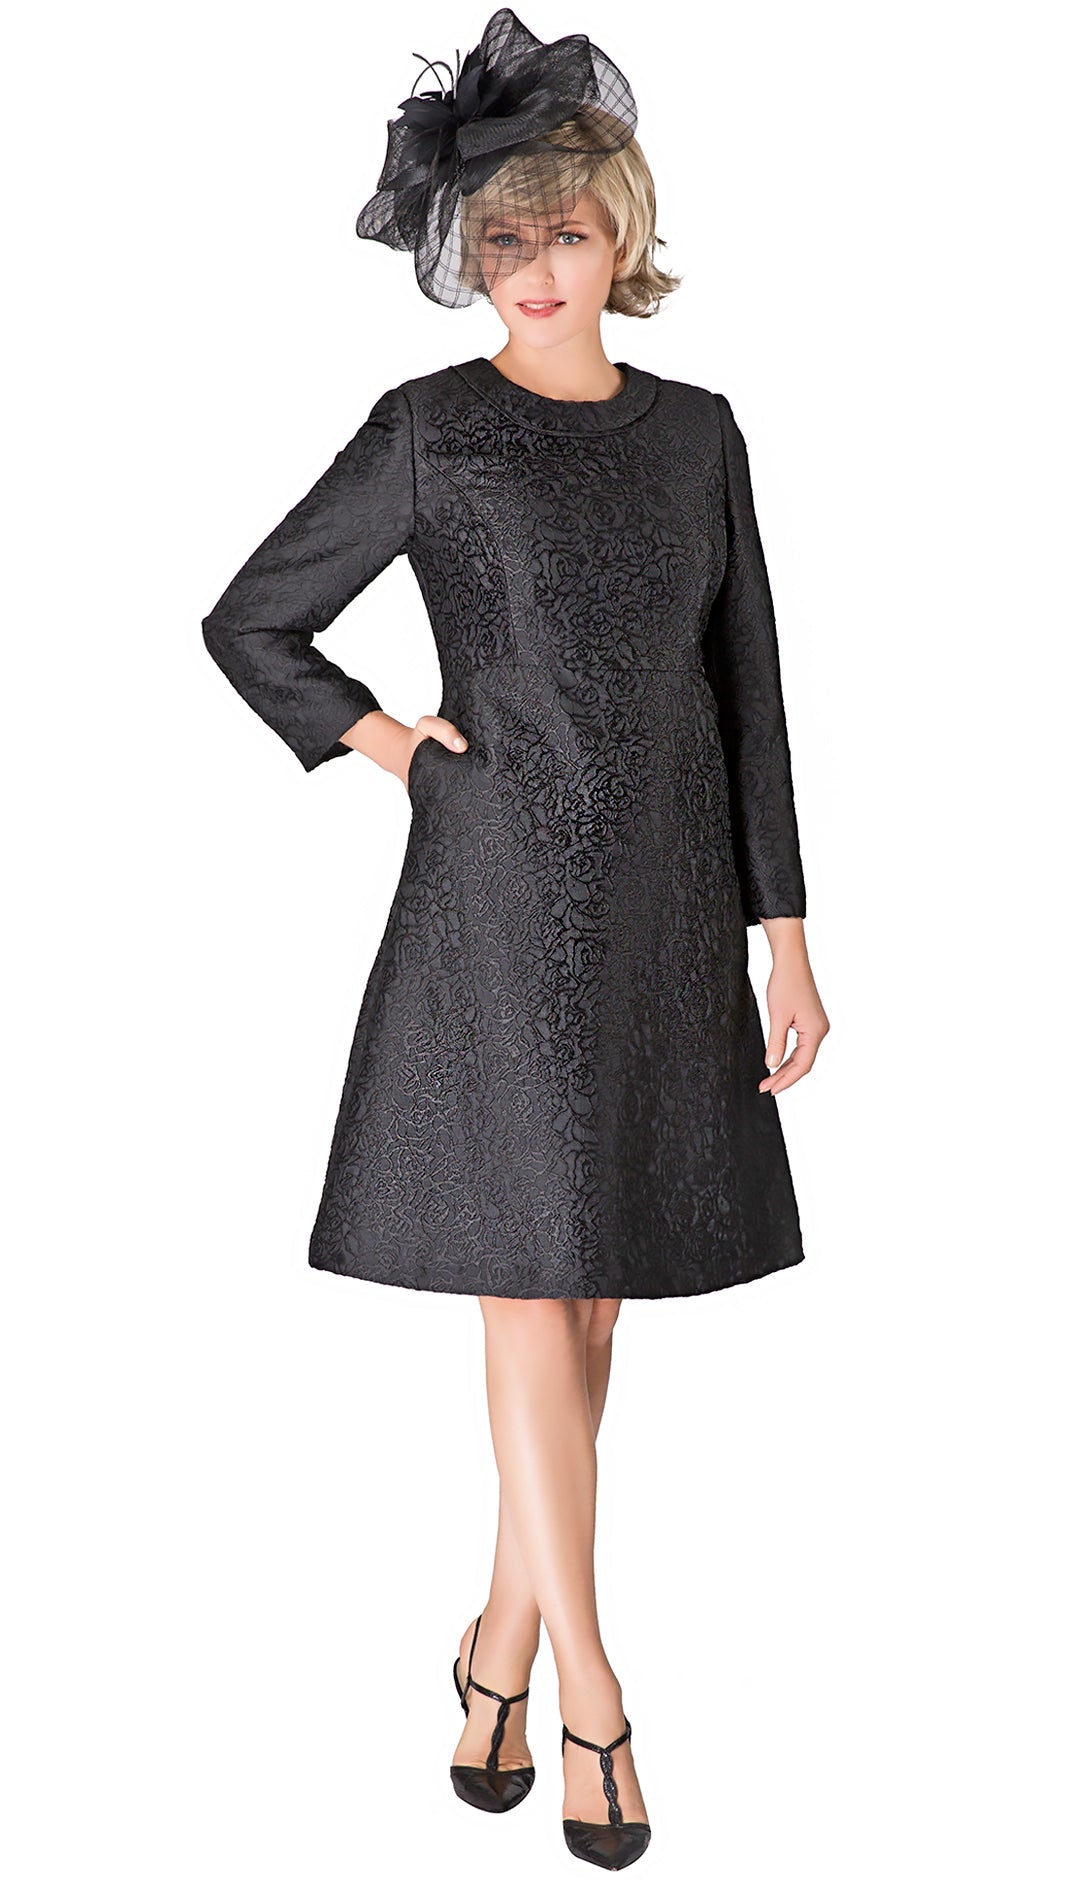 Giovanna Church Dress D1521C-Black - Church Suits For Less